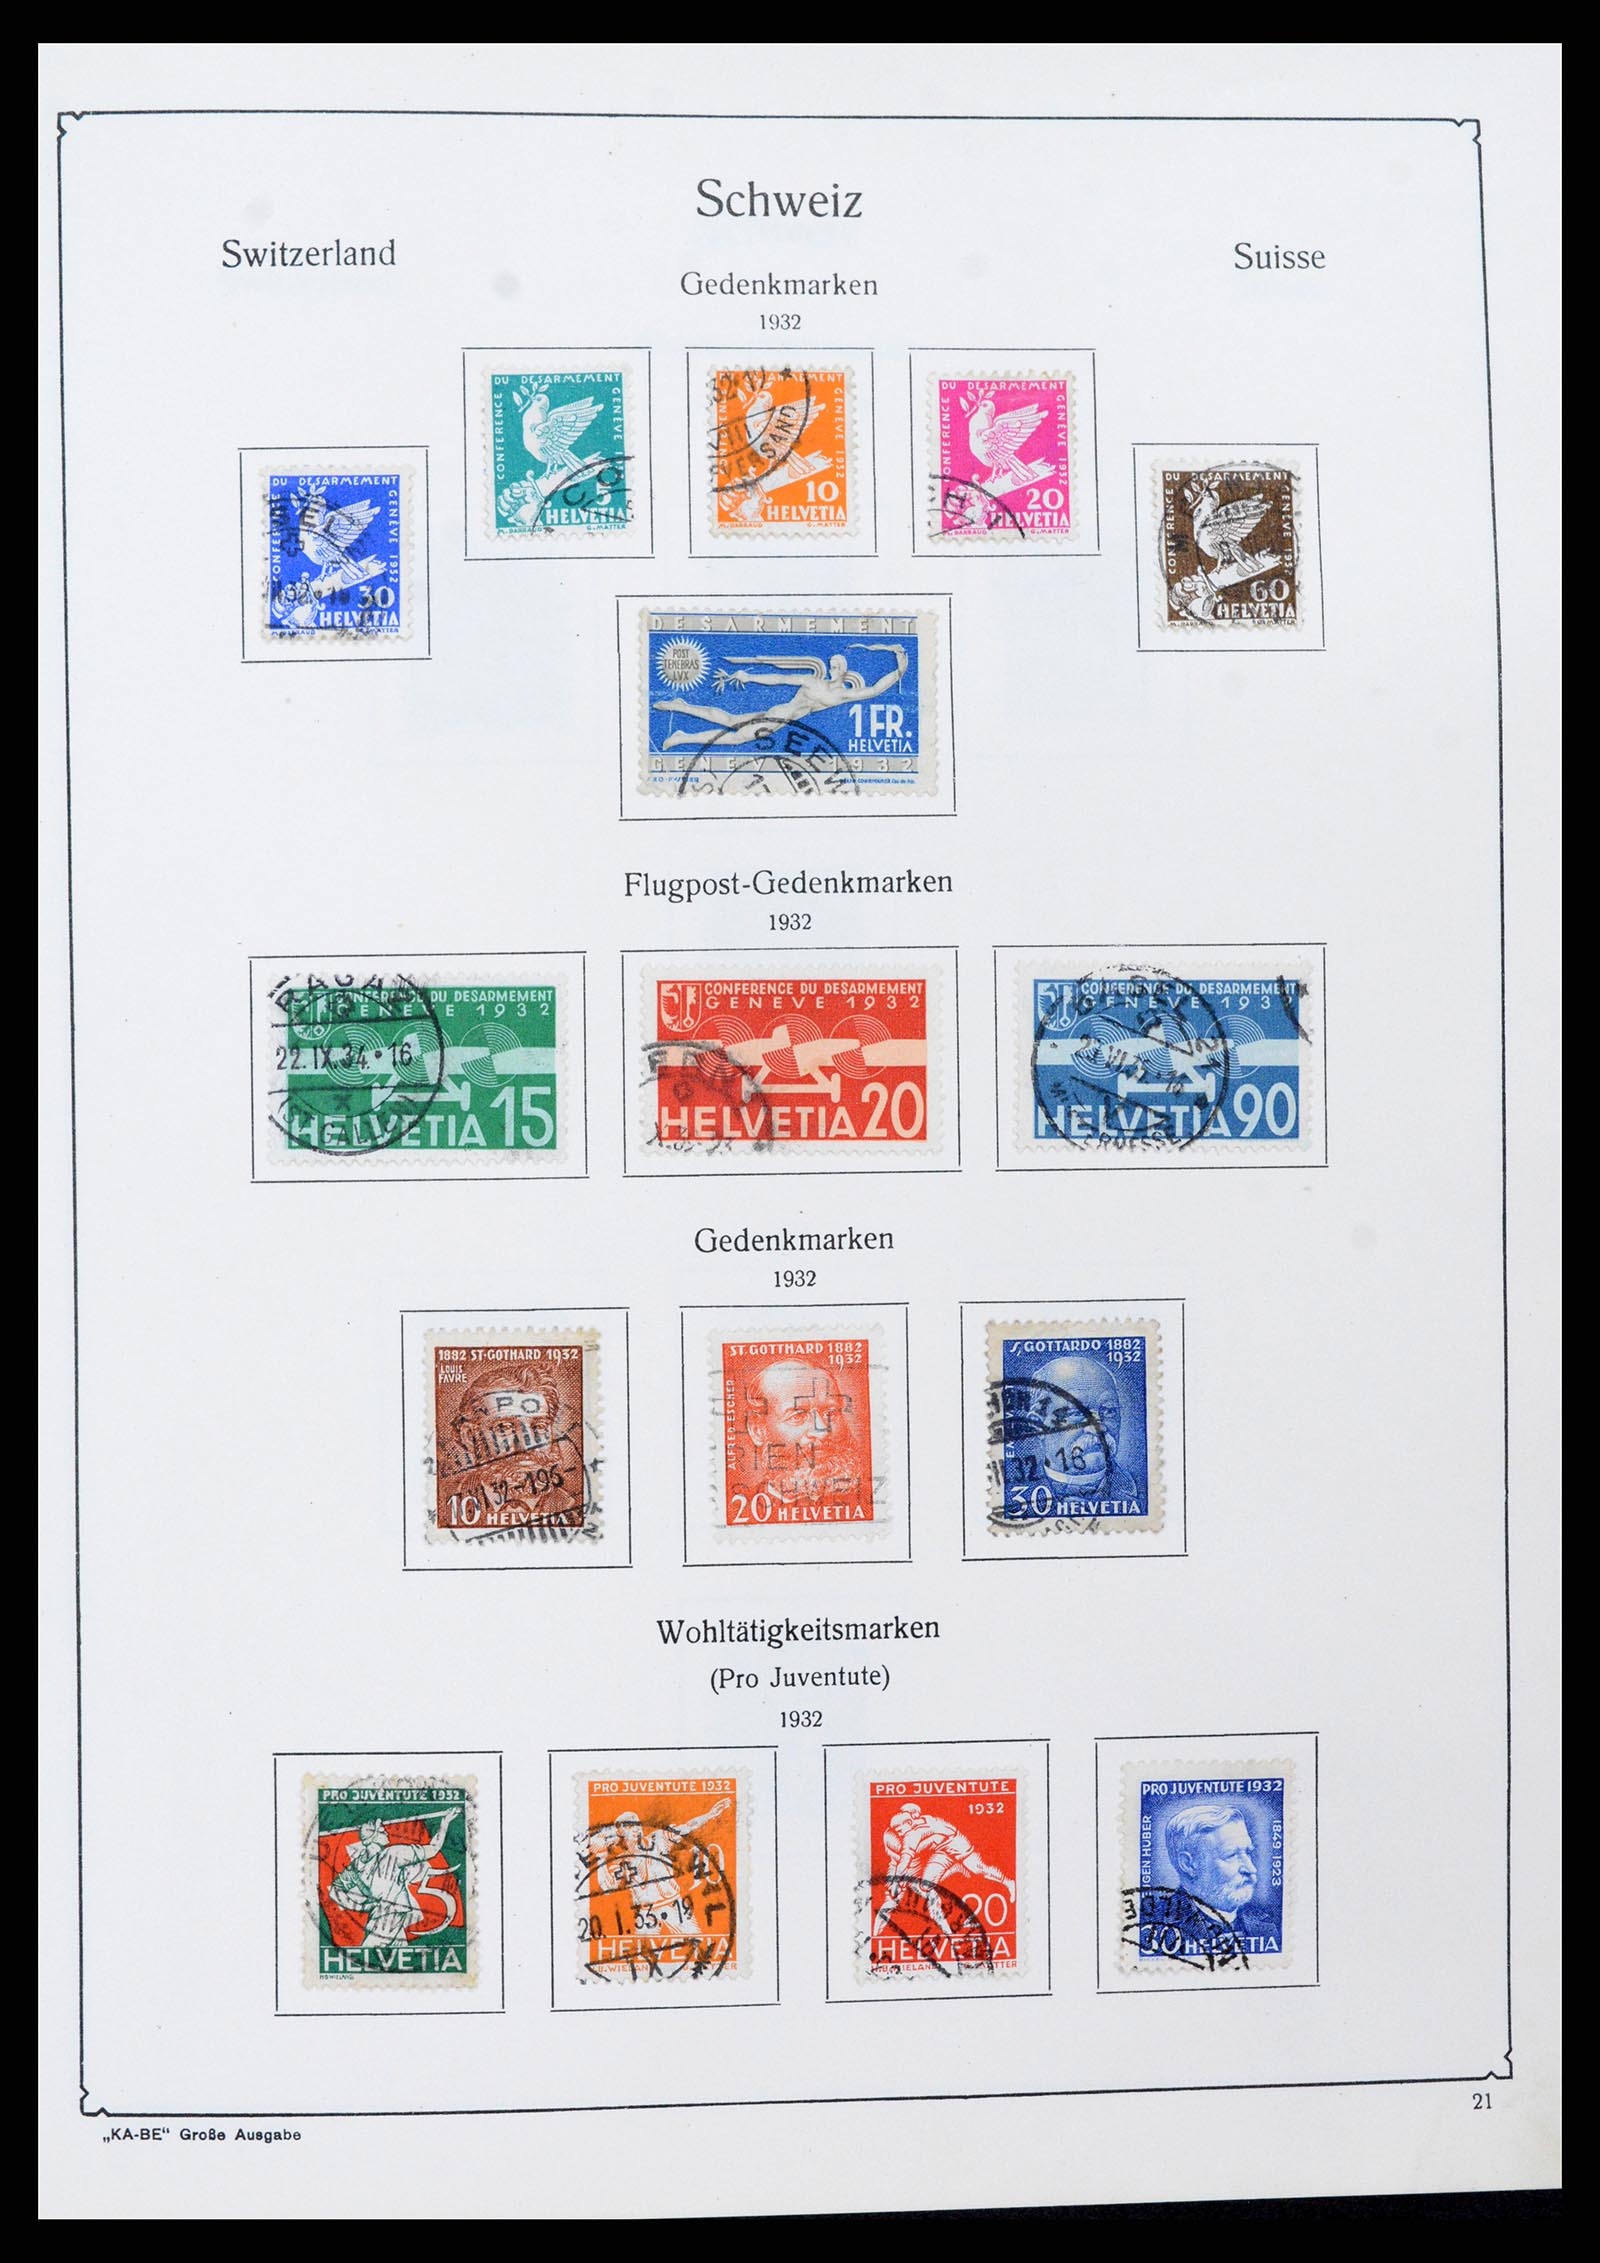 37588 020 - Stamp collection 37588 Switzerland 1854-1974.